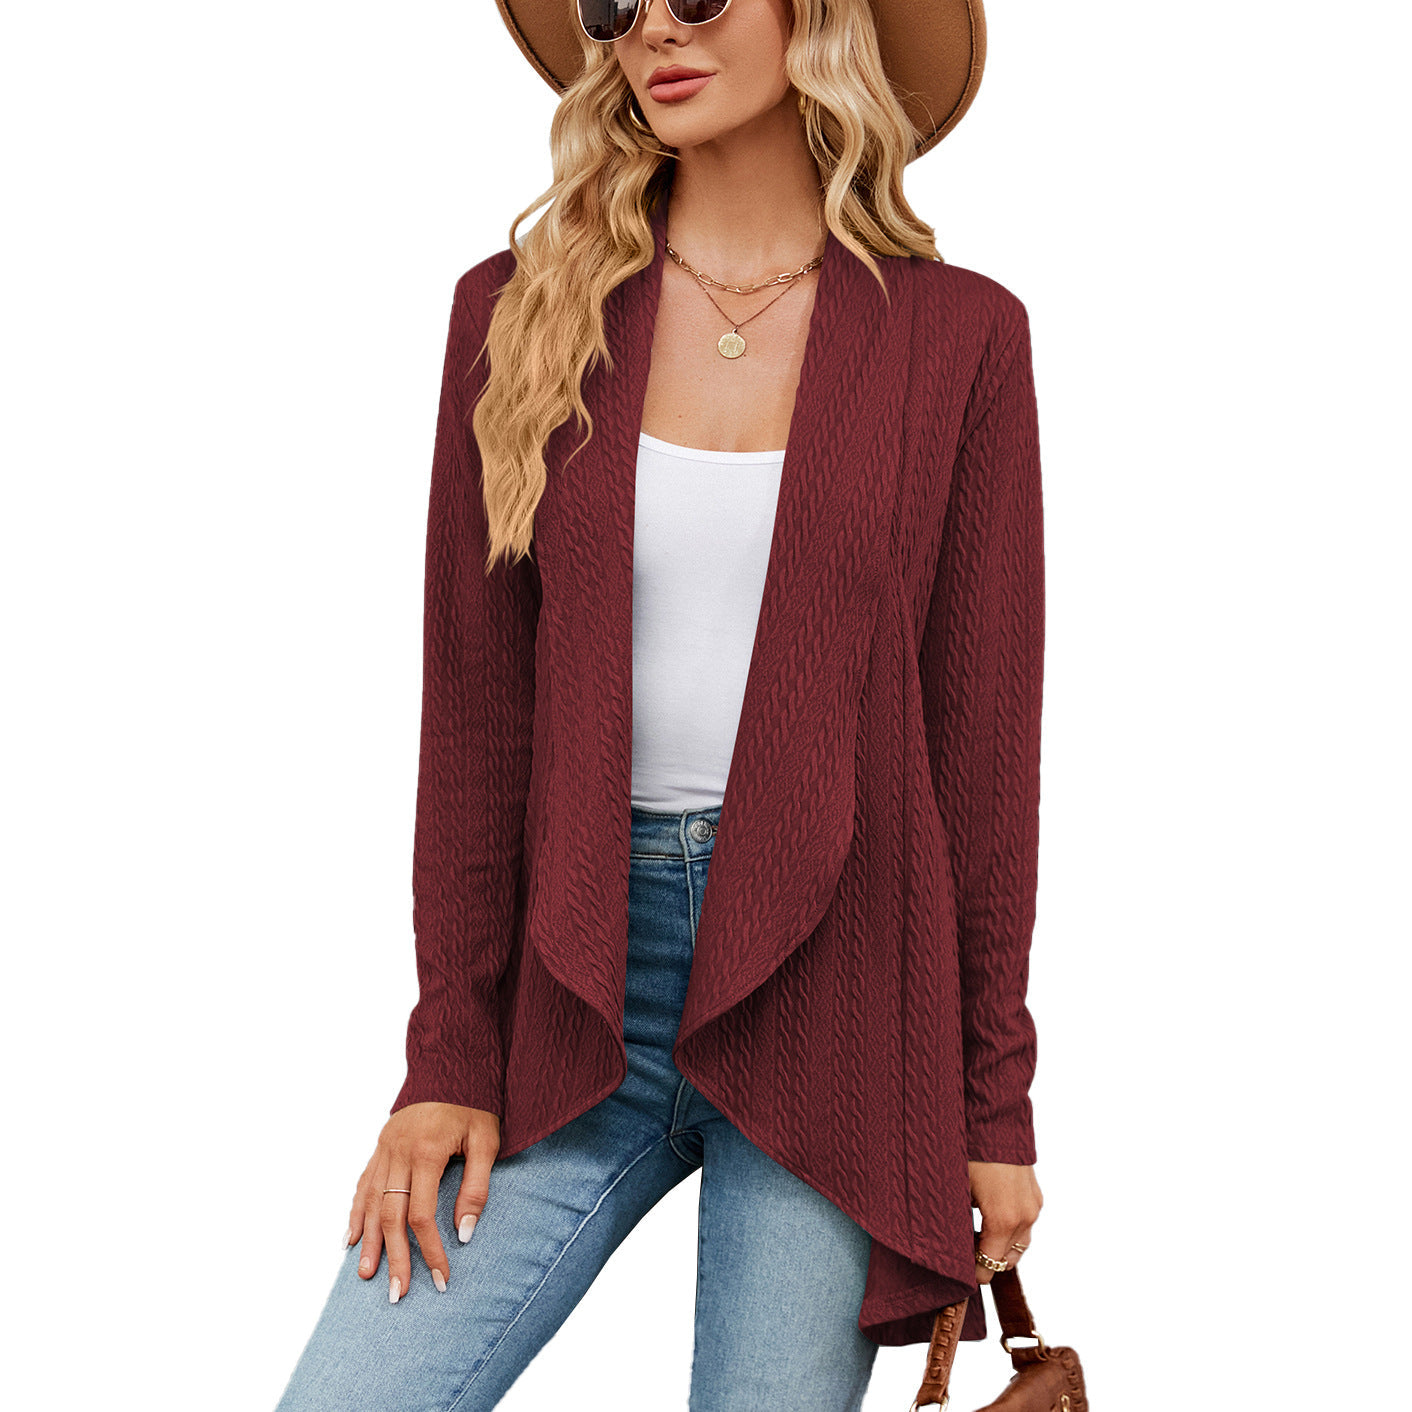 Scarlett™ - Long-sleeved jacket for women in a solid color model